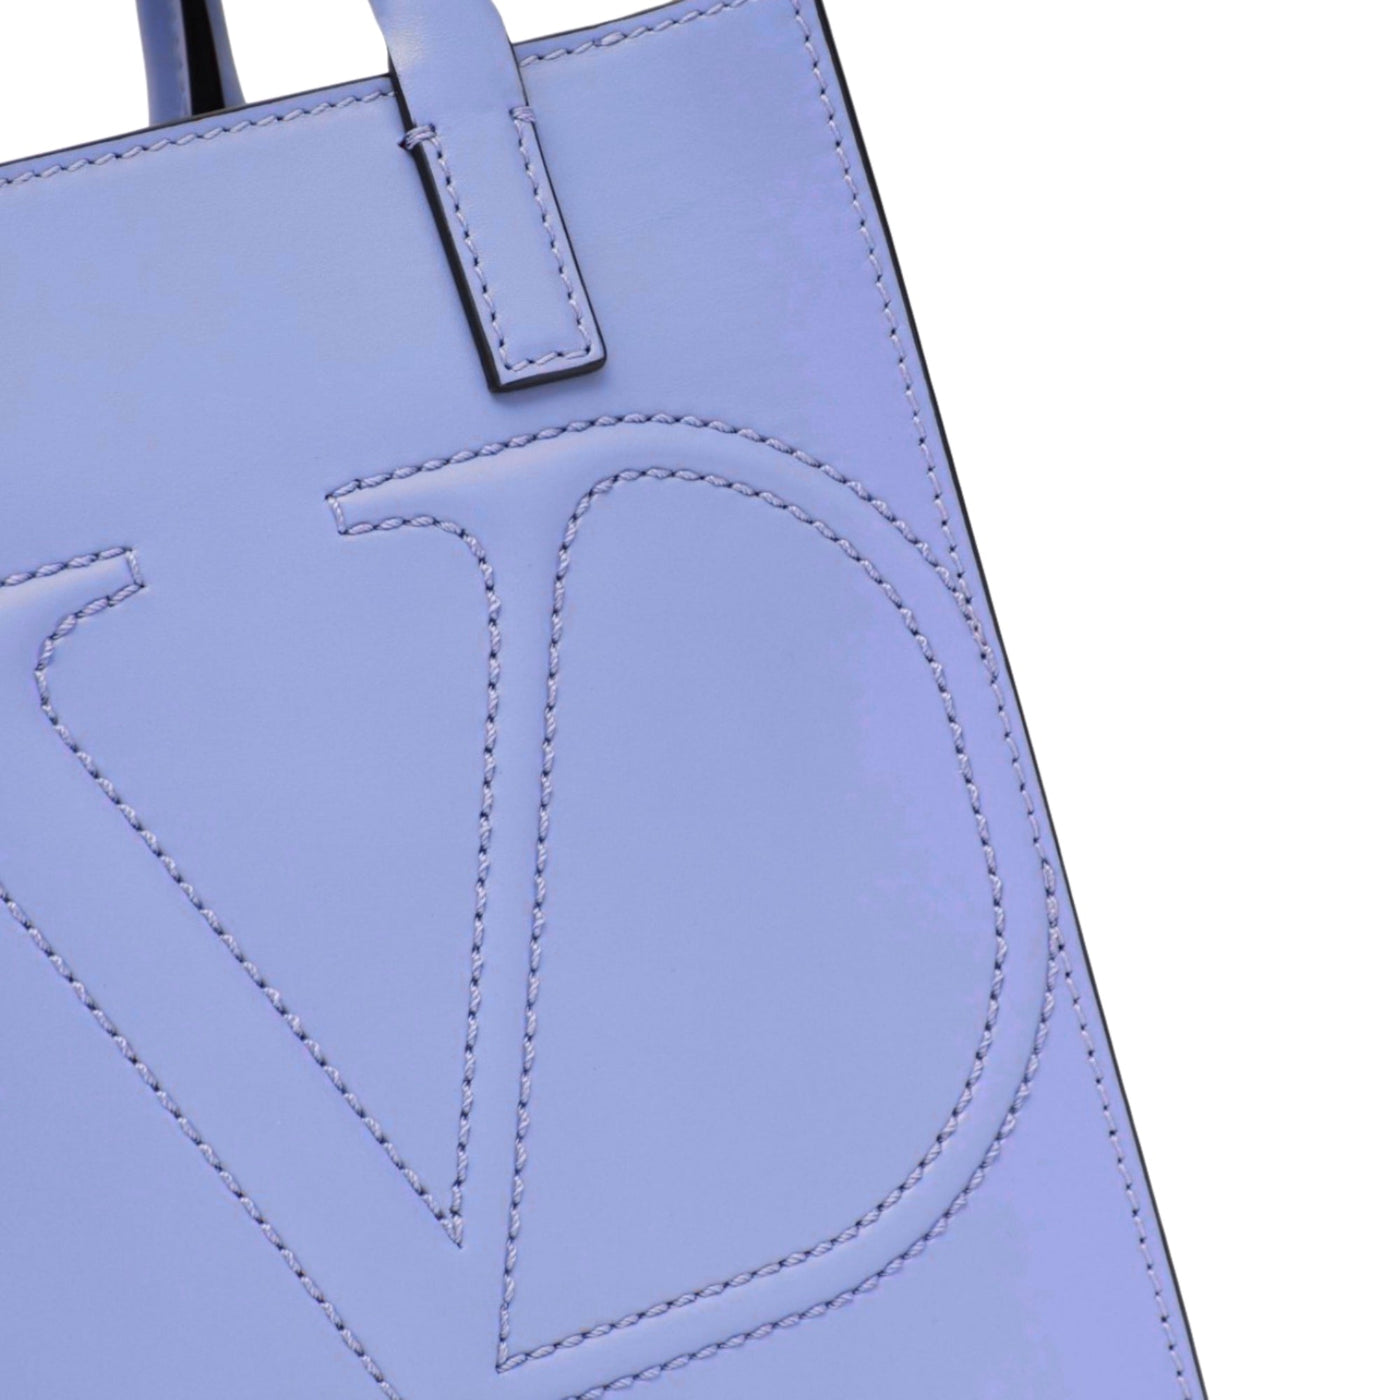 Valentino Garavani VLogo Walk Mini Crossbody Tote Bag Blue Calf Leather - LUXURYMRKT